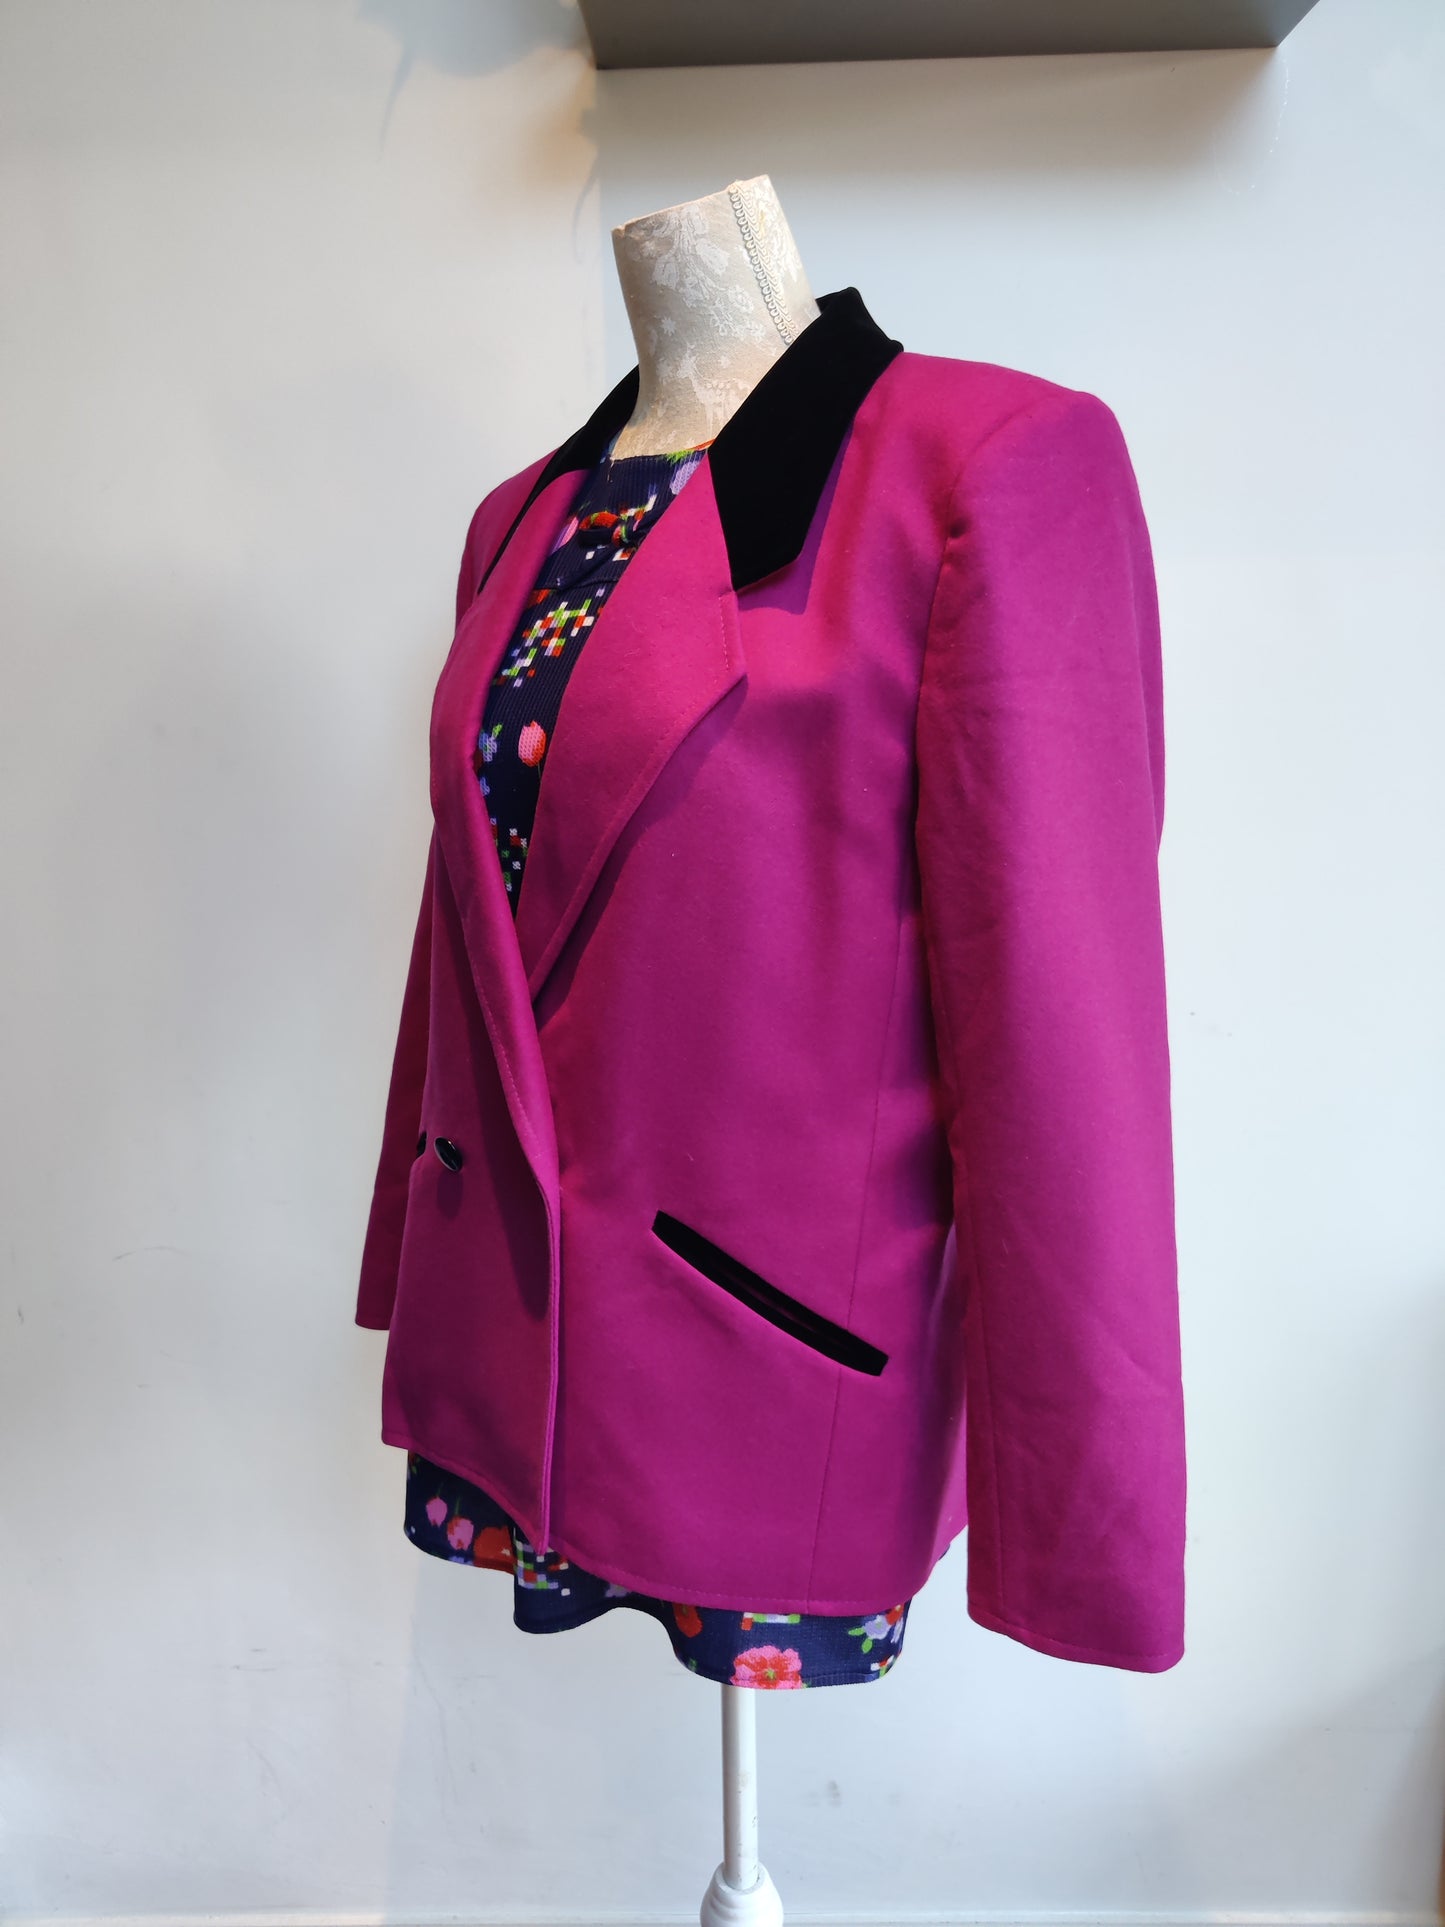 Vintage Windsmoor jacket in fuchsia pink